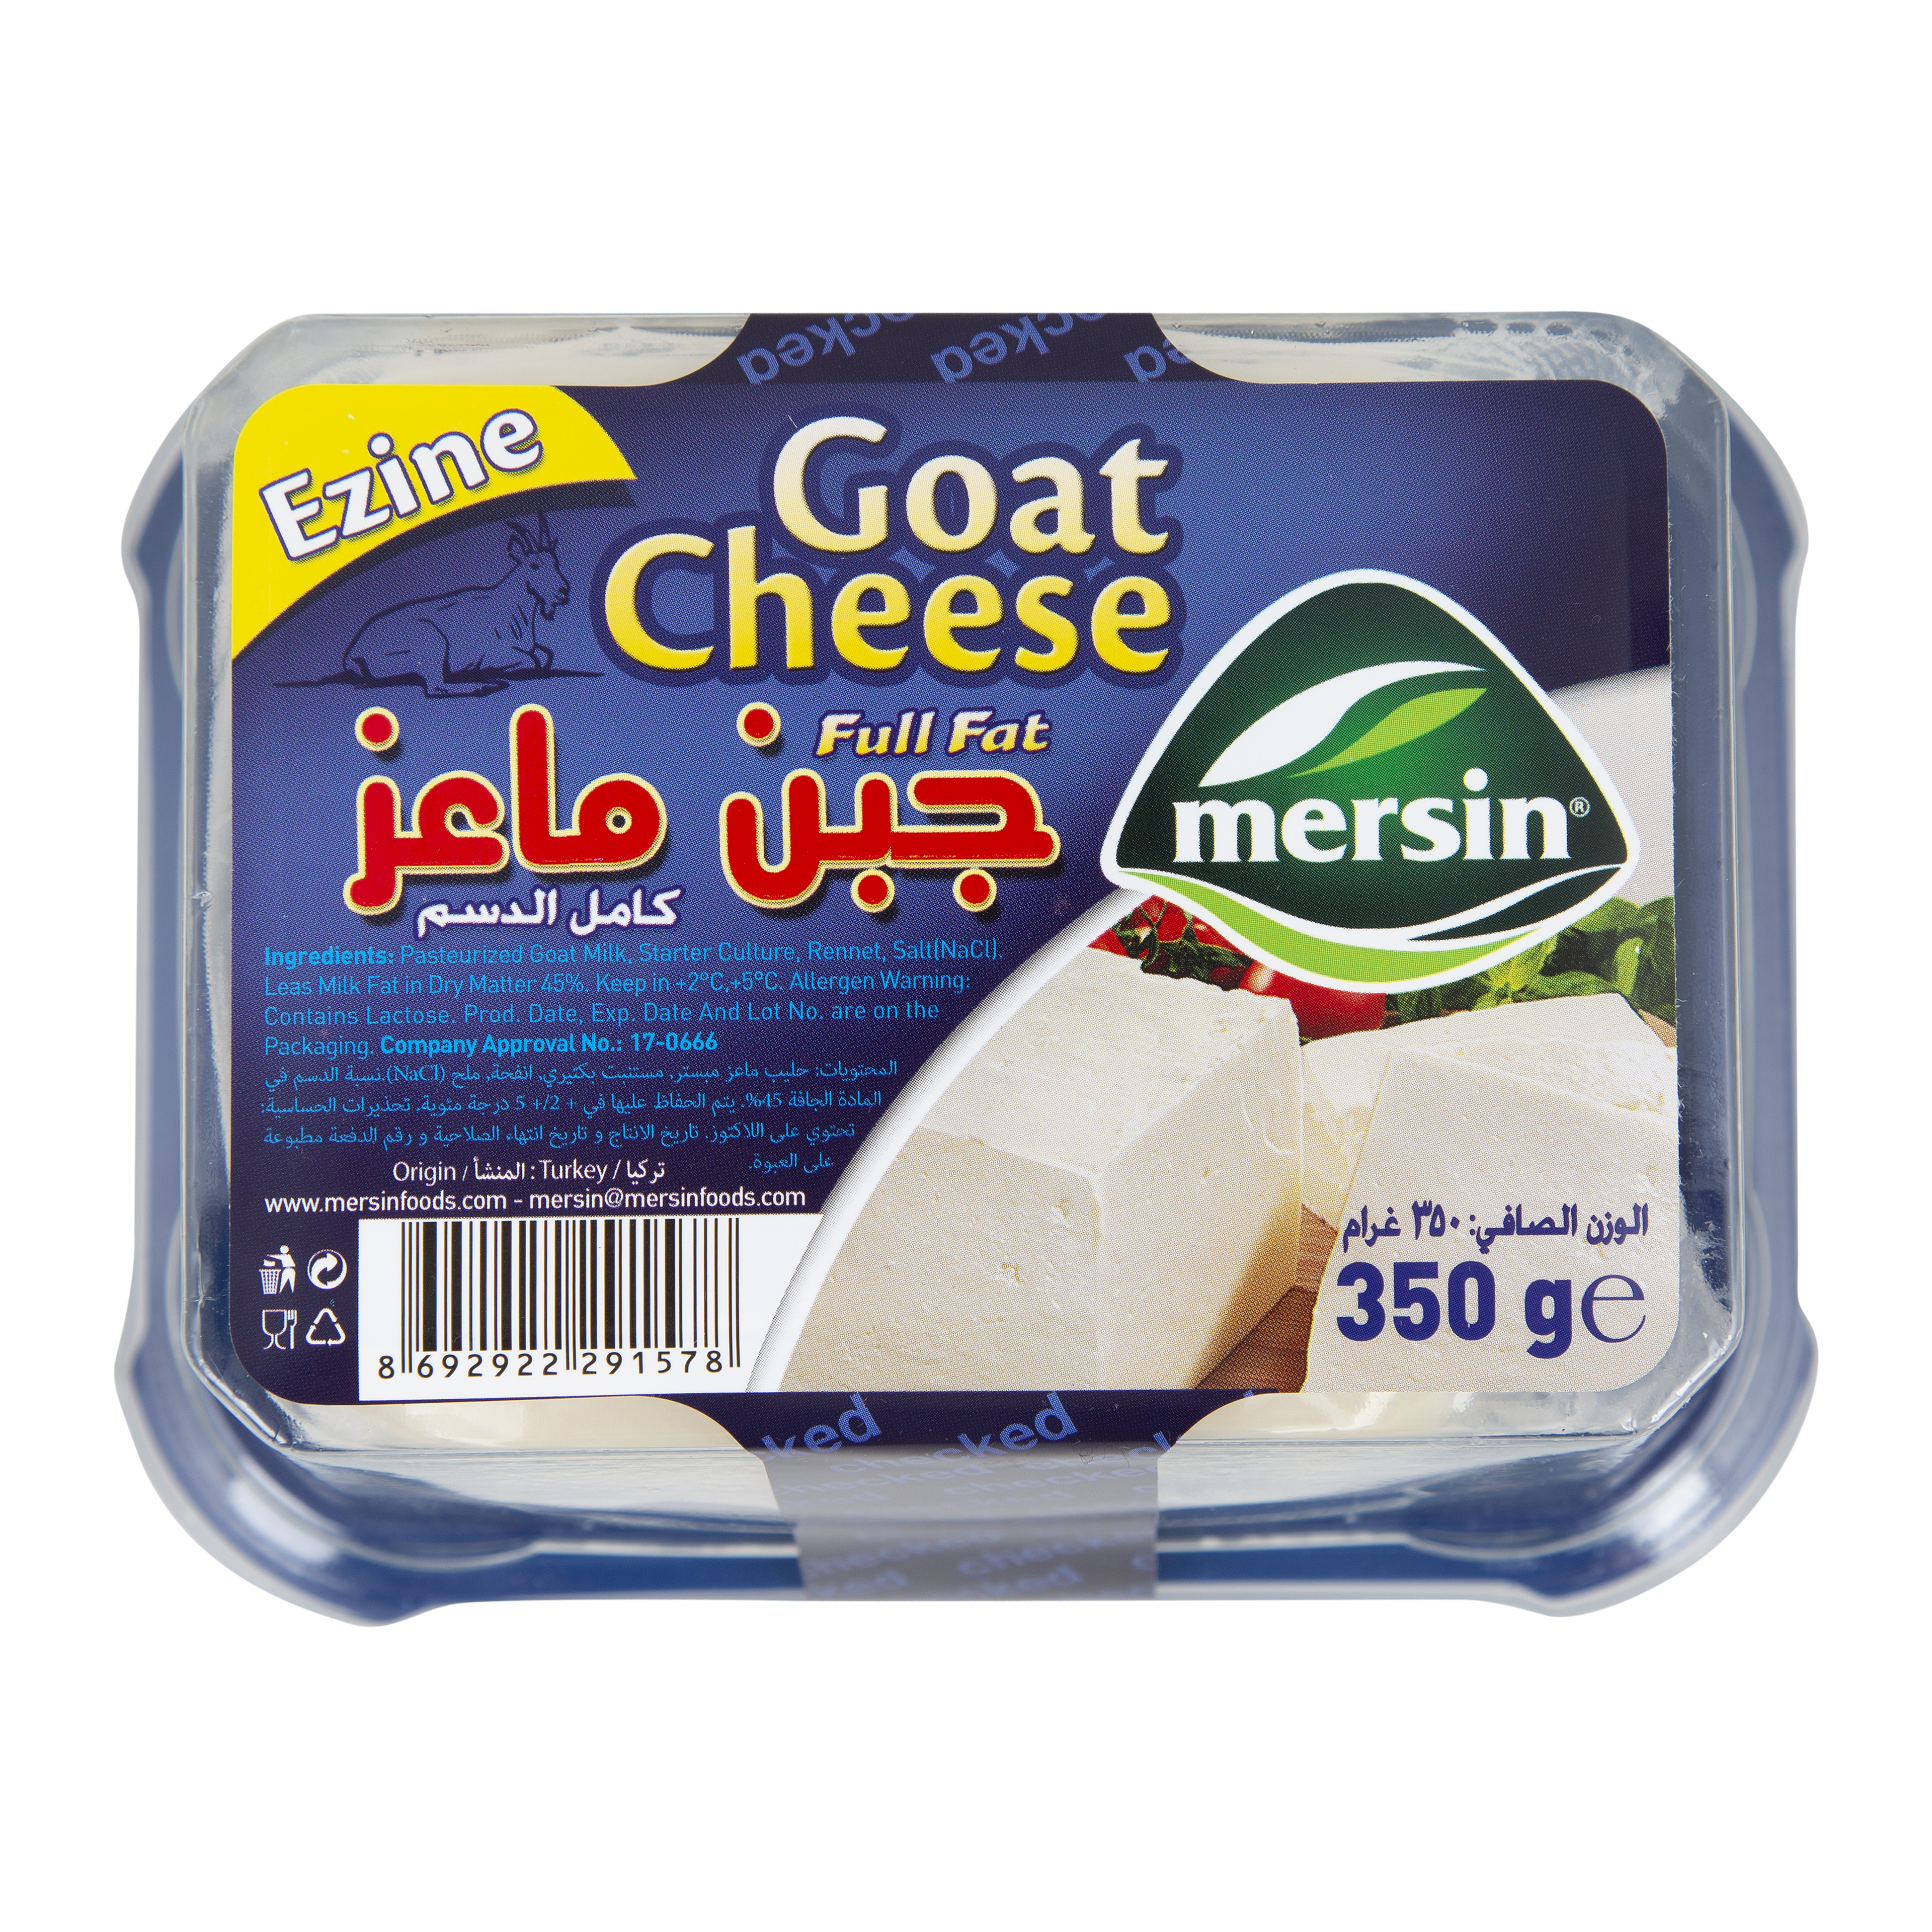 Mersin Goat Cheese Full Fat 350 G